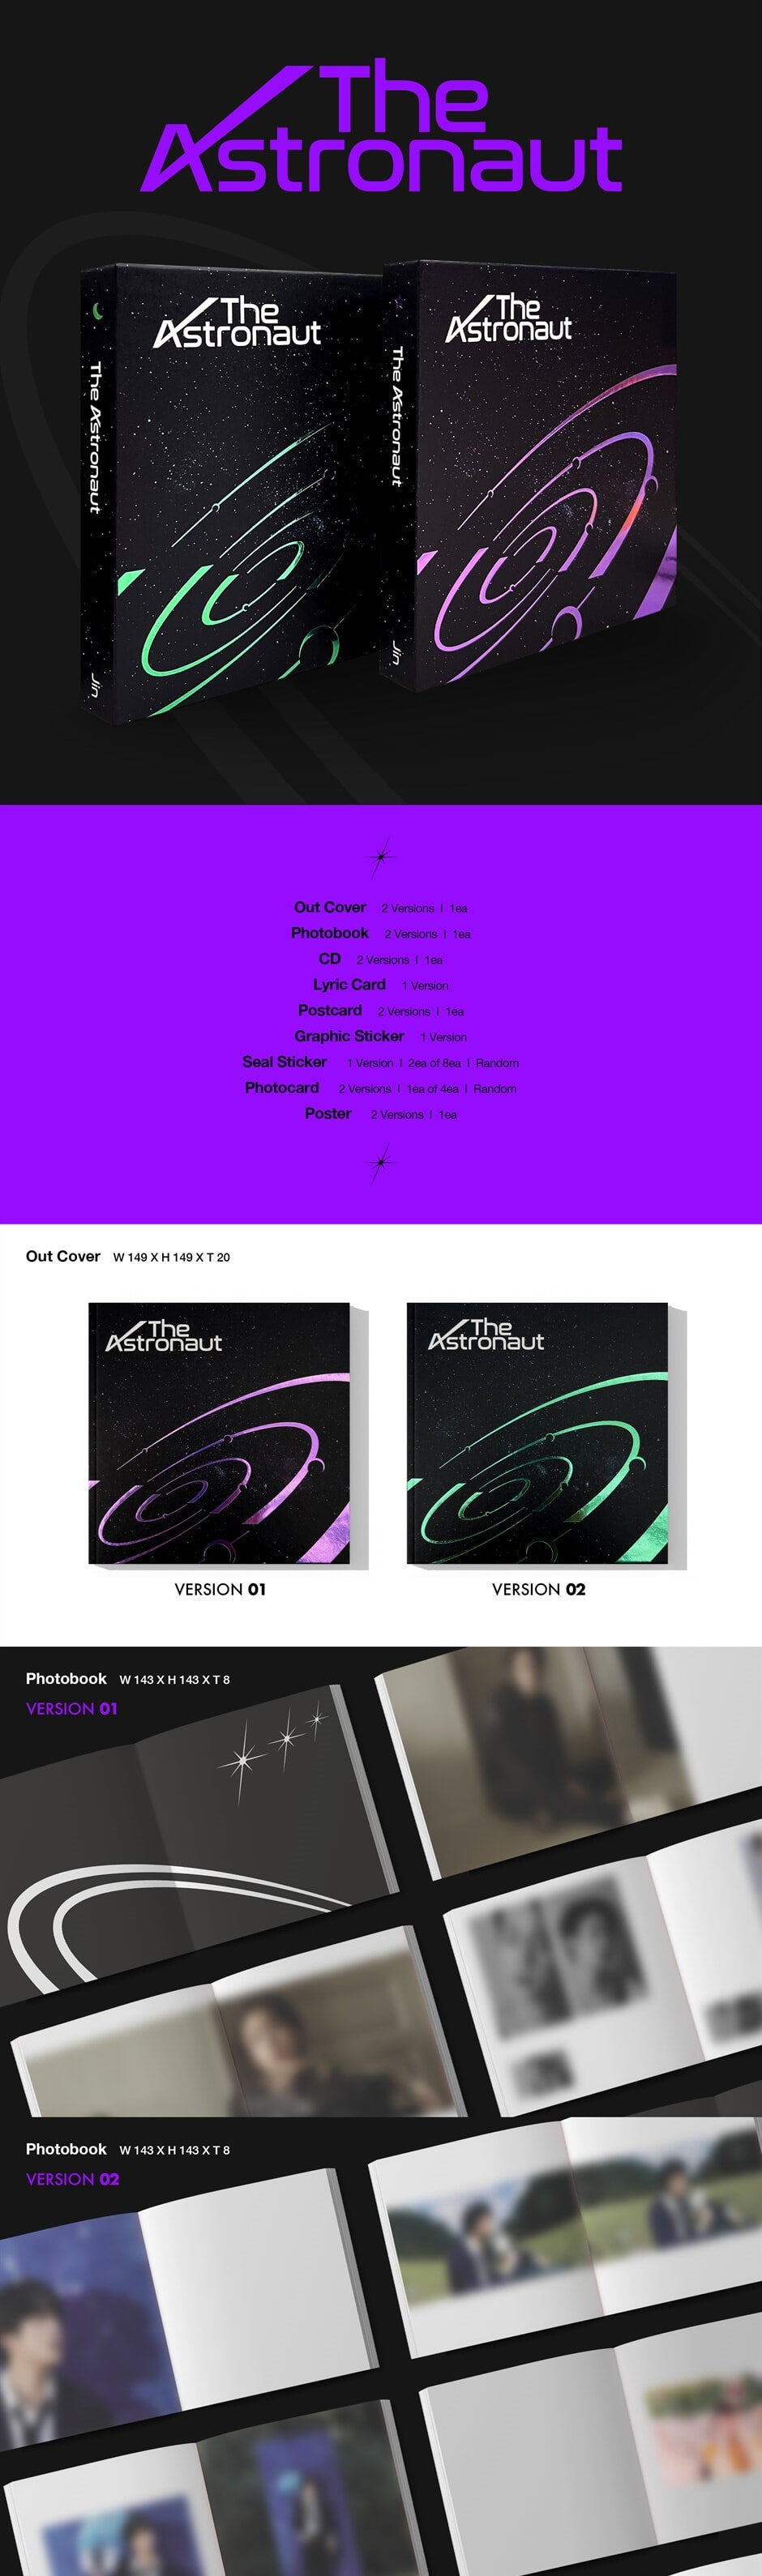 K-Pop CD Jin (BTS) 'The Astronaut'